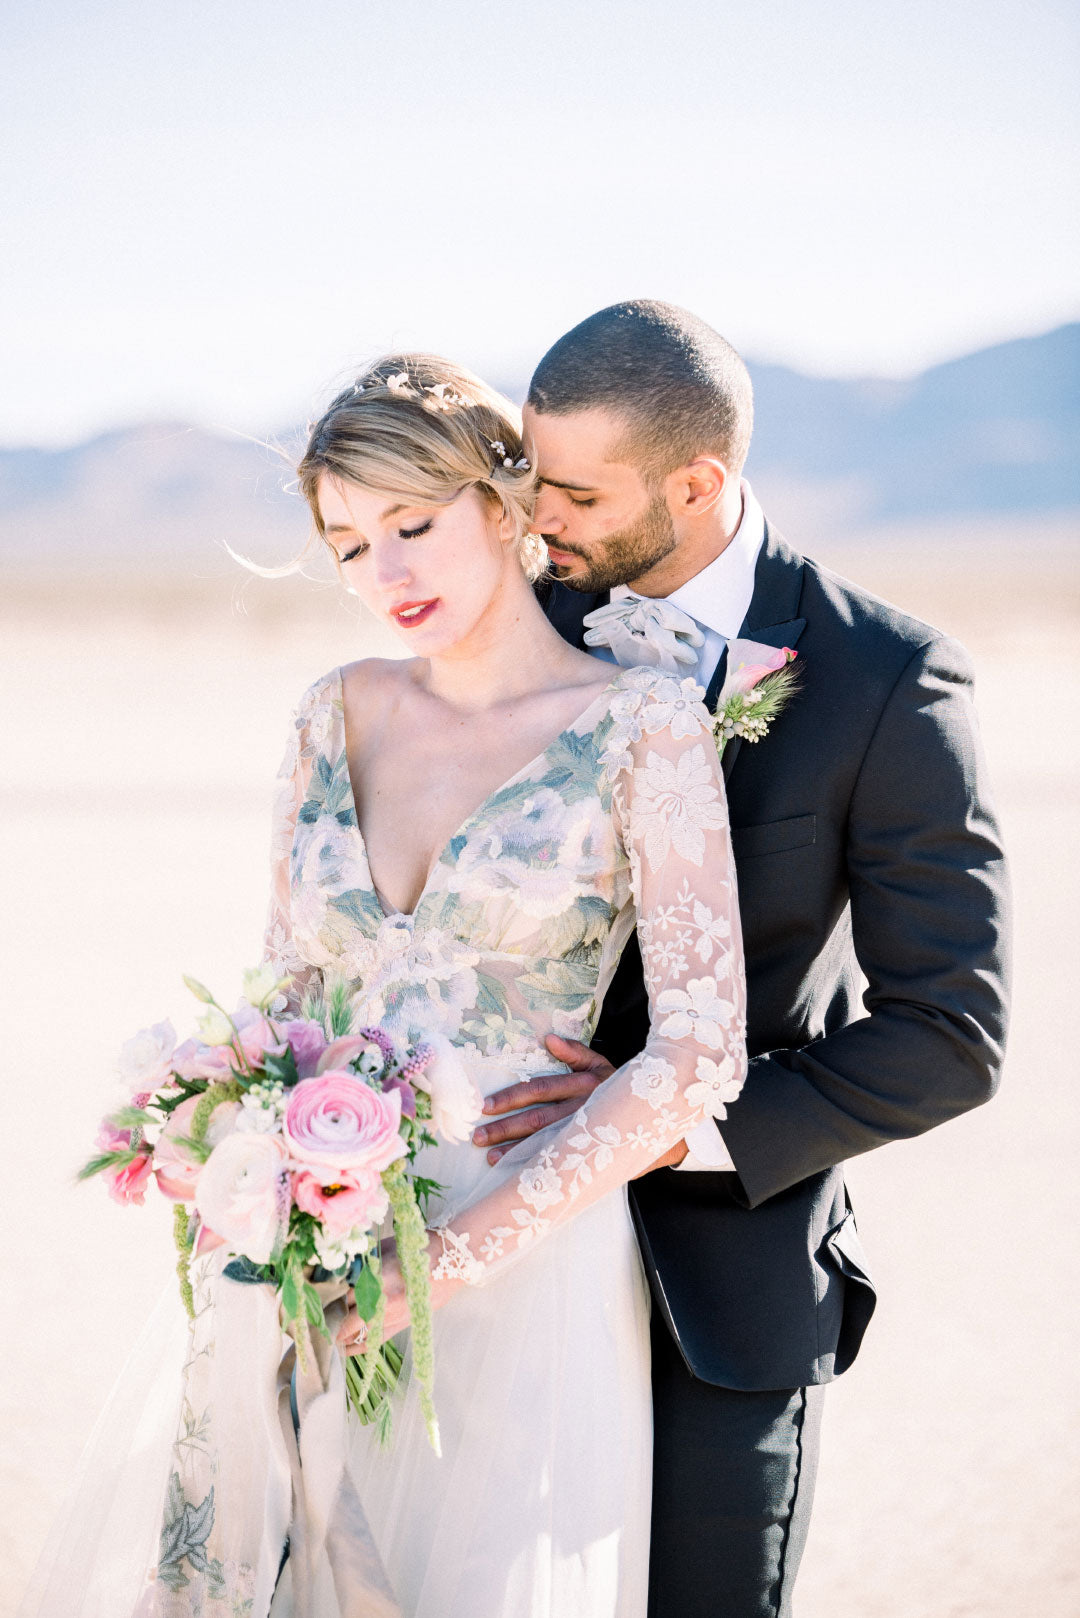 Primavera wedding dress Bride with Groom in Tuxedo on desert lake bed